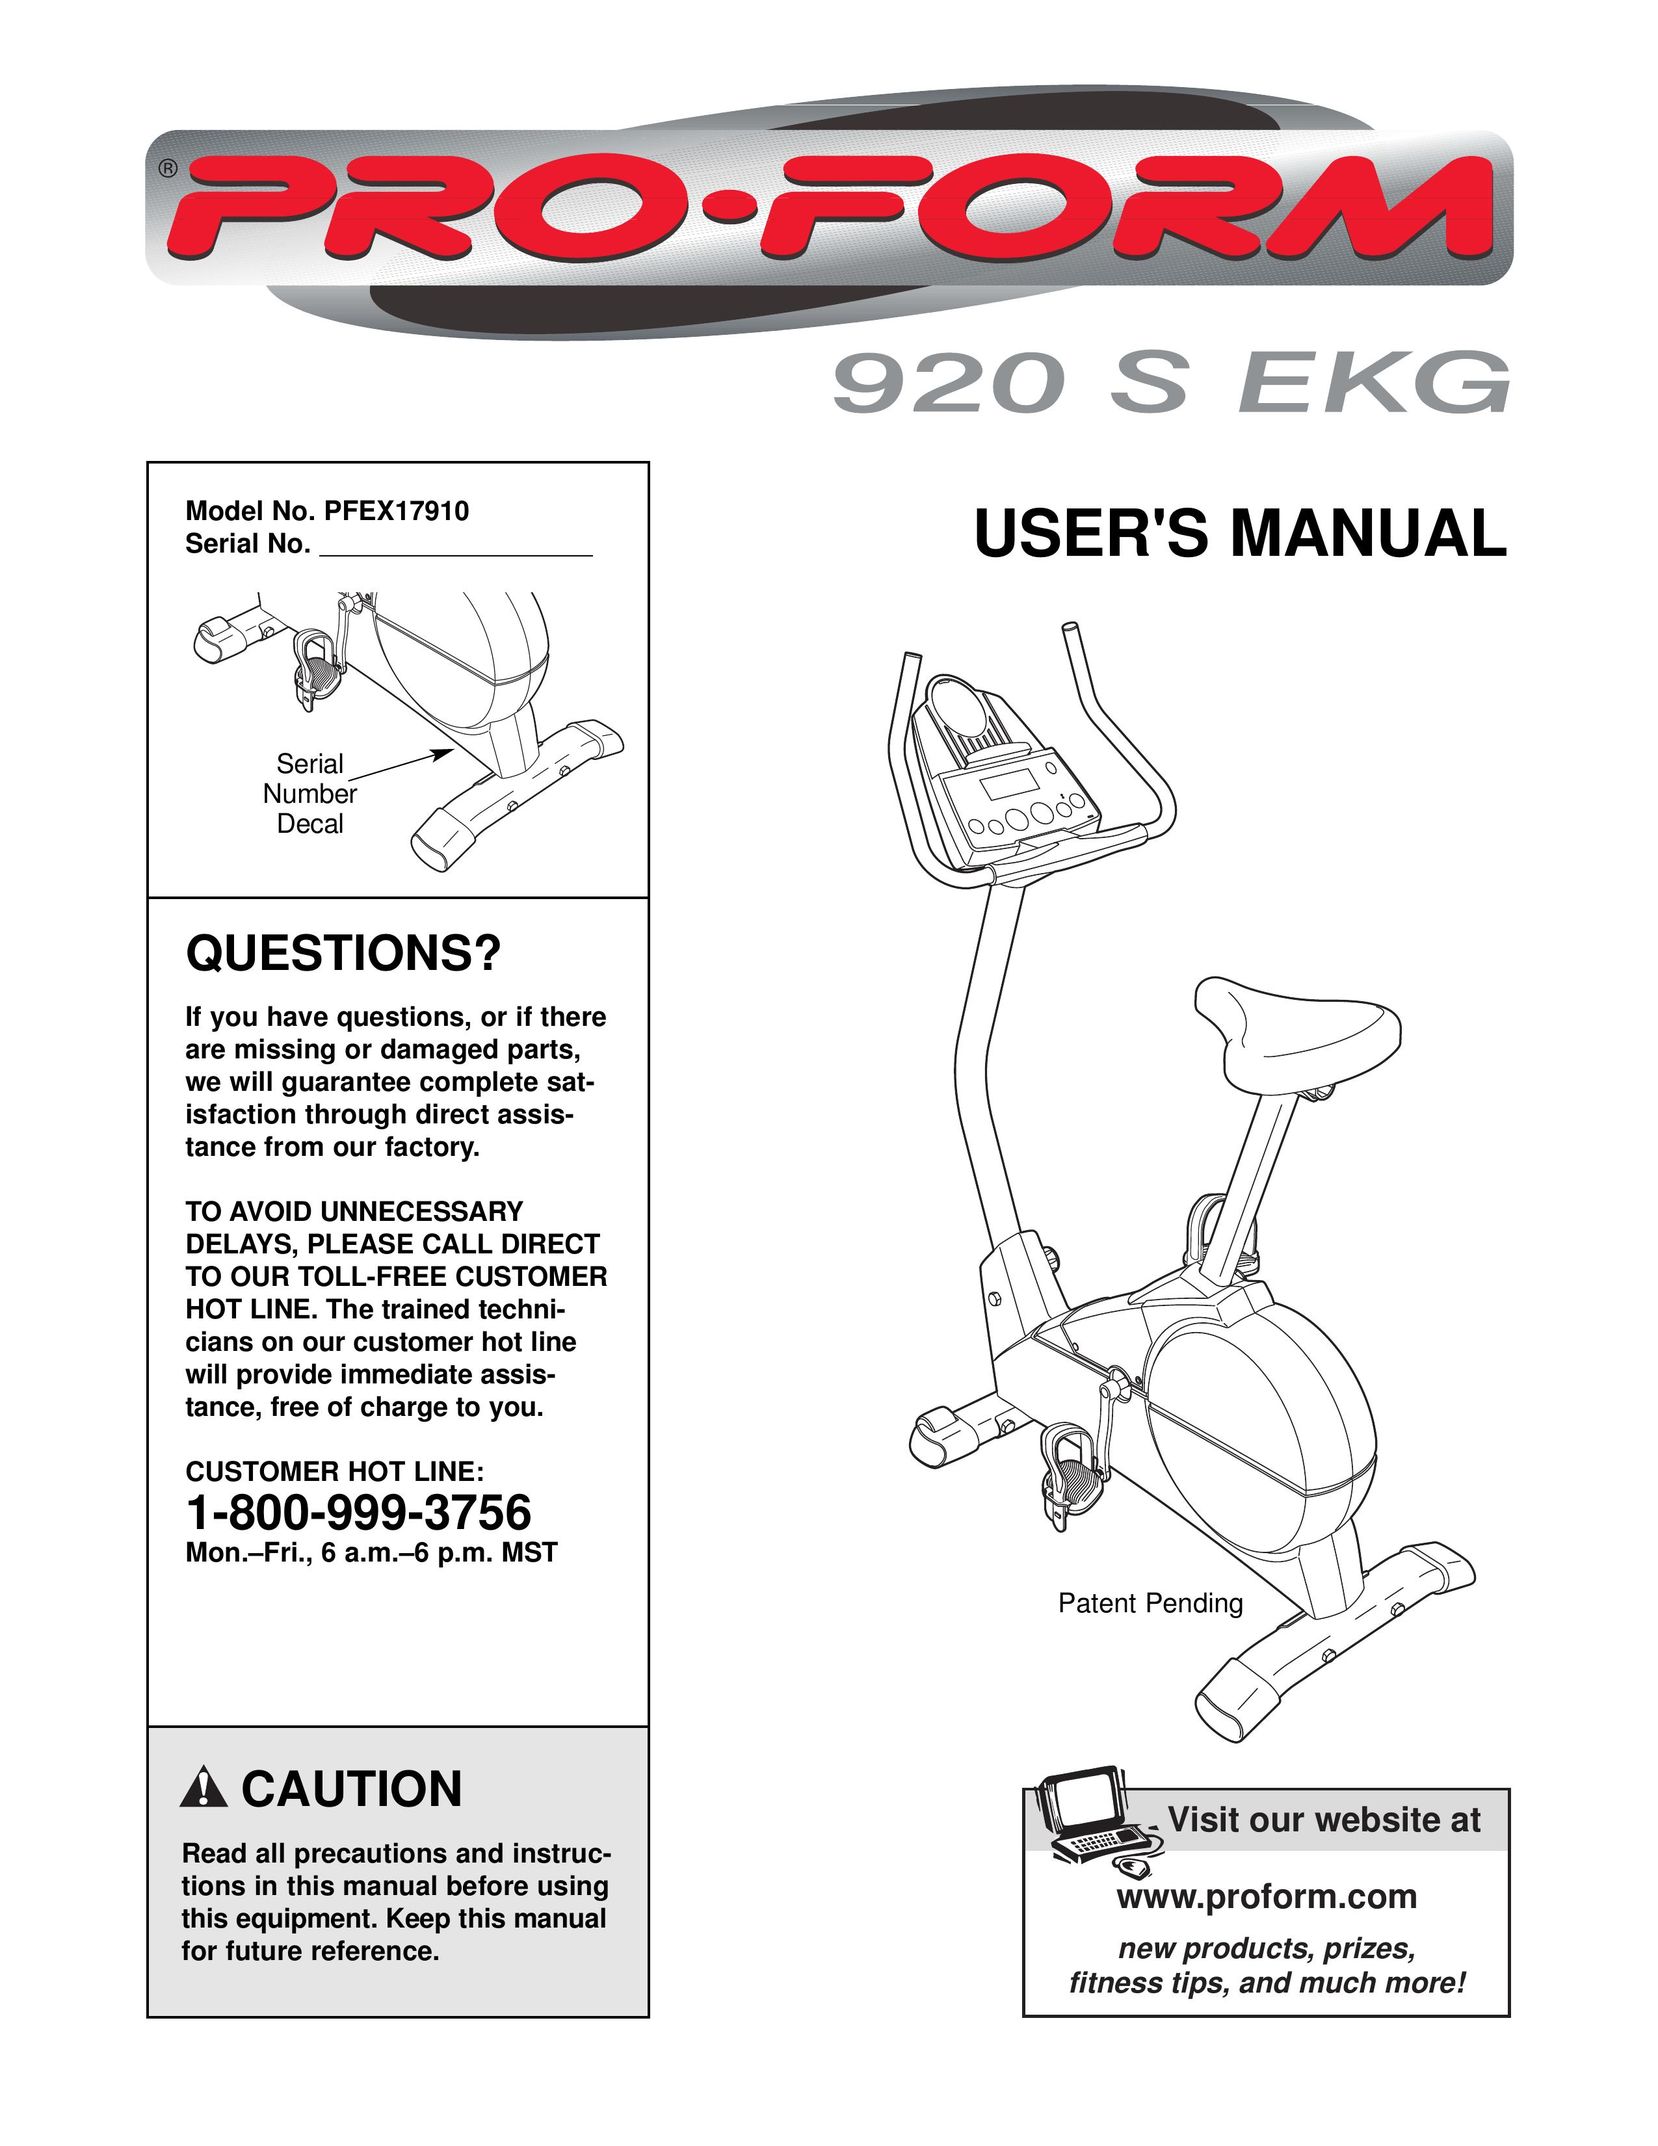 ProForm PFEX17910 Exercise Bike User Manual